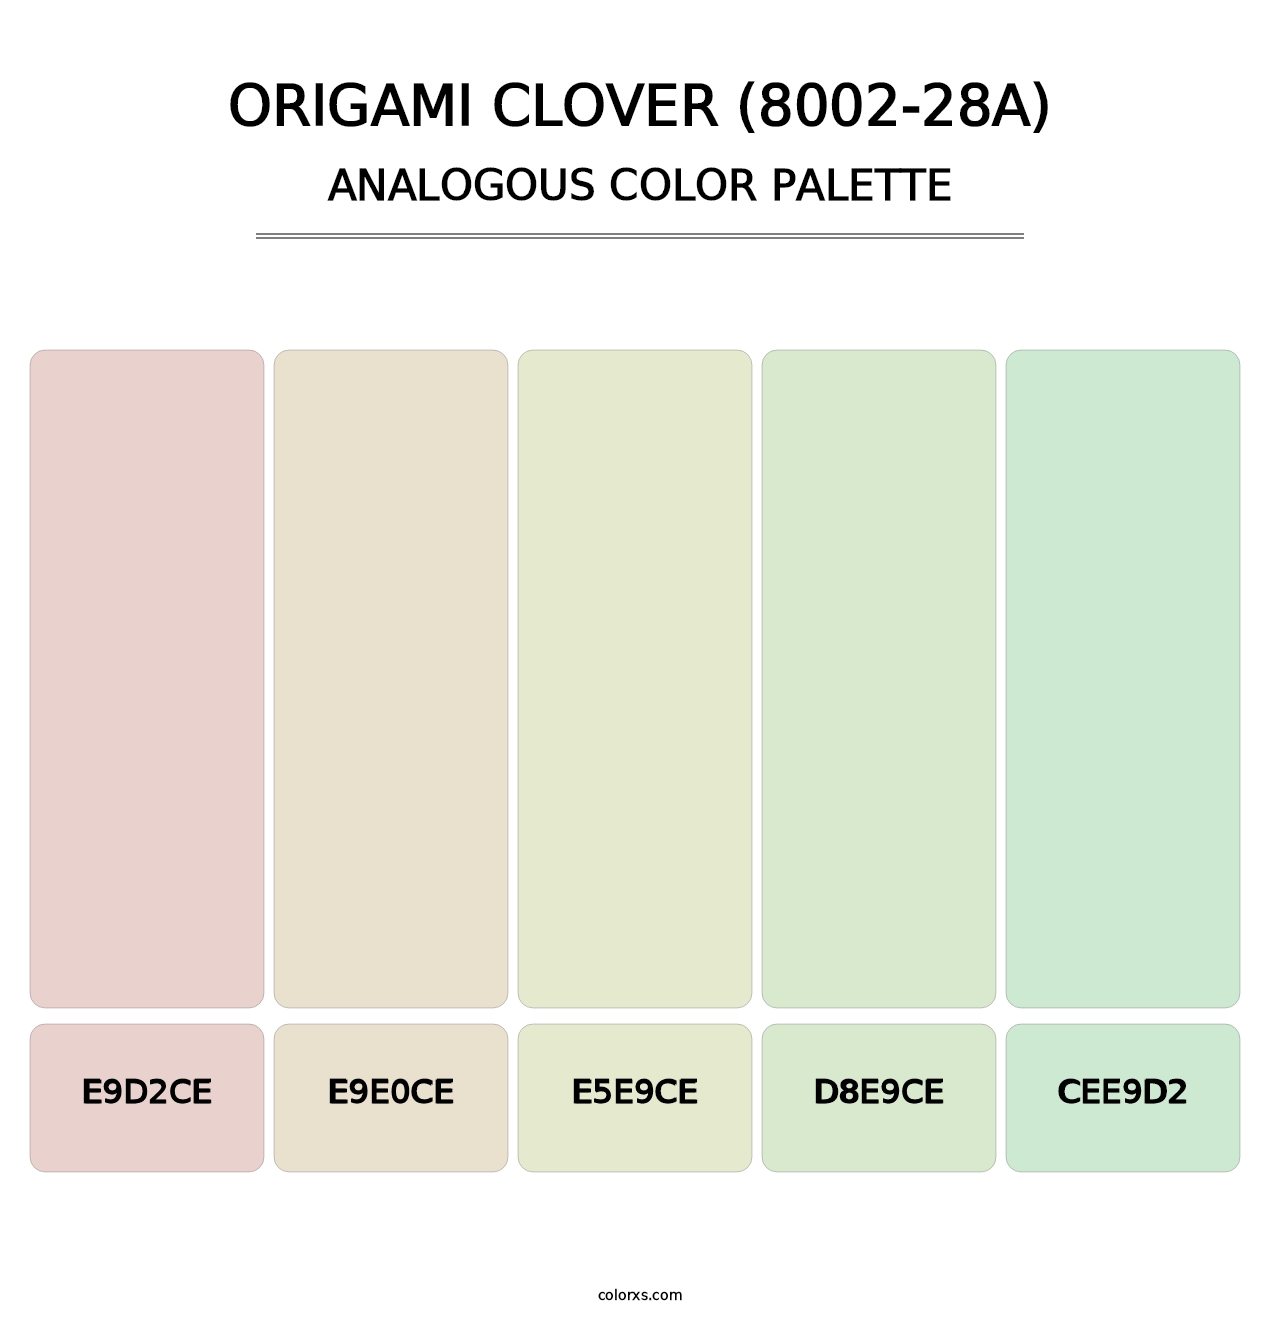 Origami Clover (8002-28A) - Analogous Color Palette